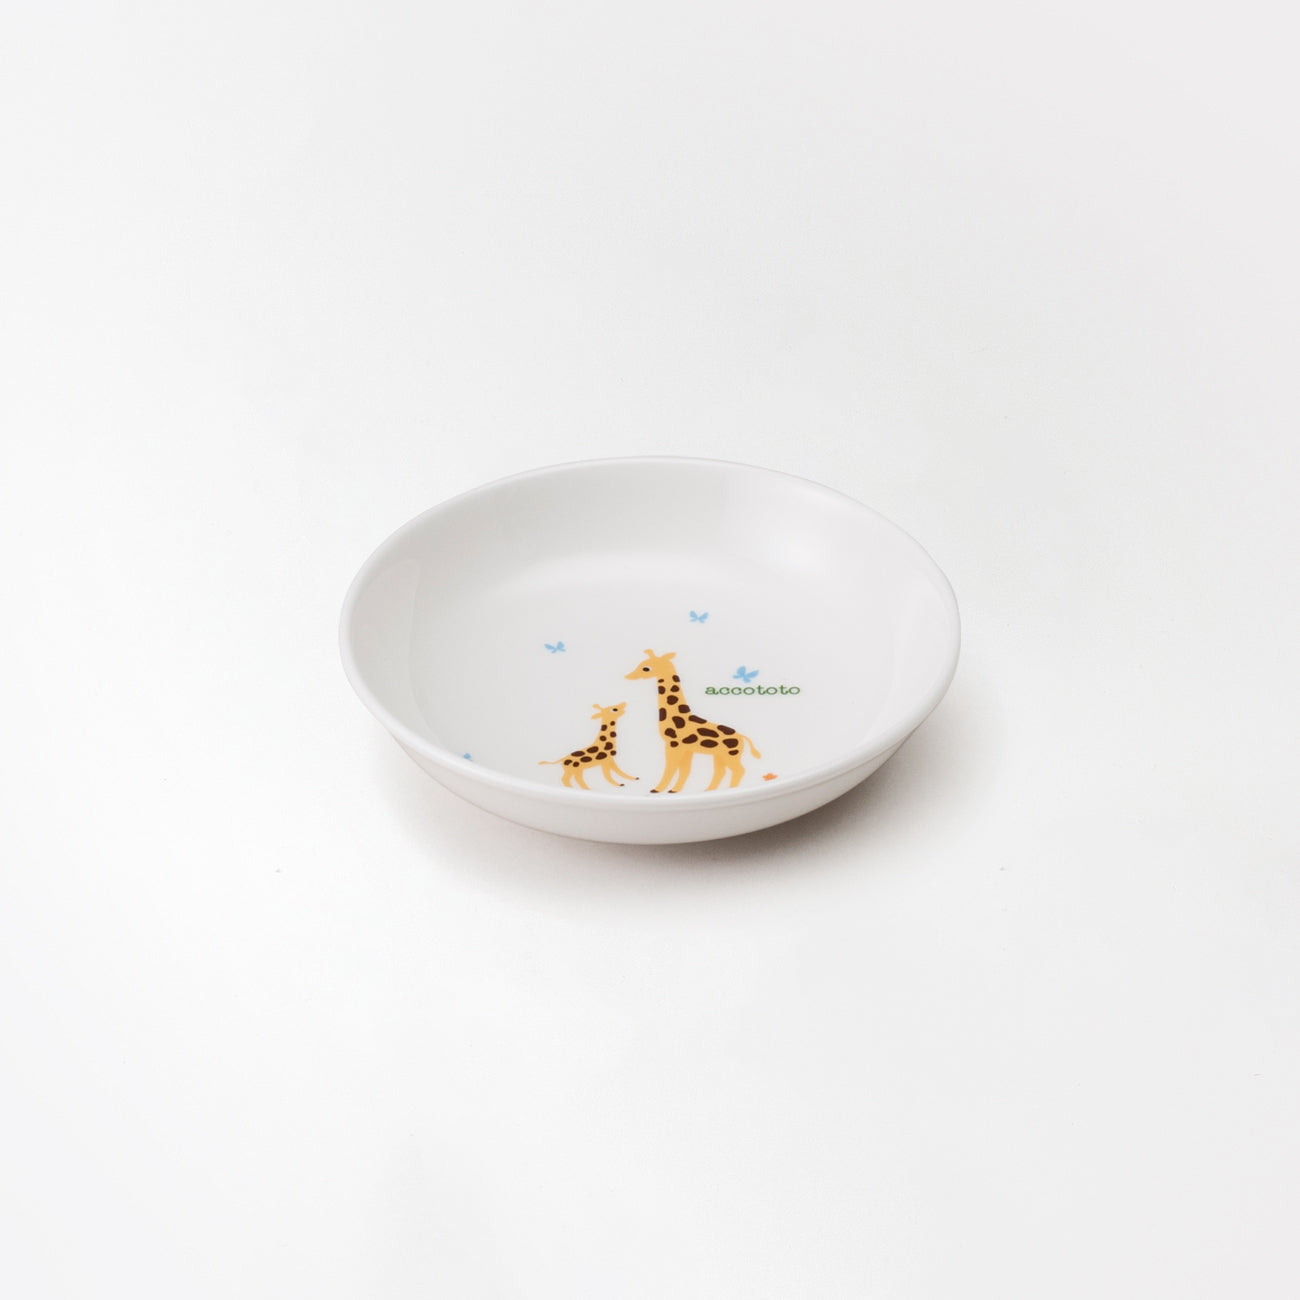 NIKKO ニッコー 子供食器 13cm深皿 accototo(アッコトト) (キリン) 8200G-0313